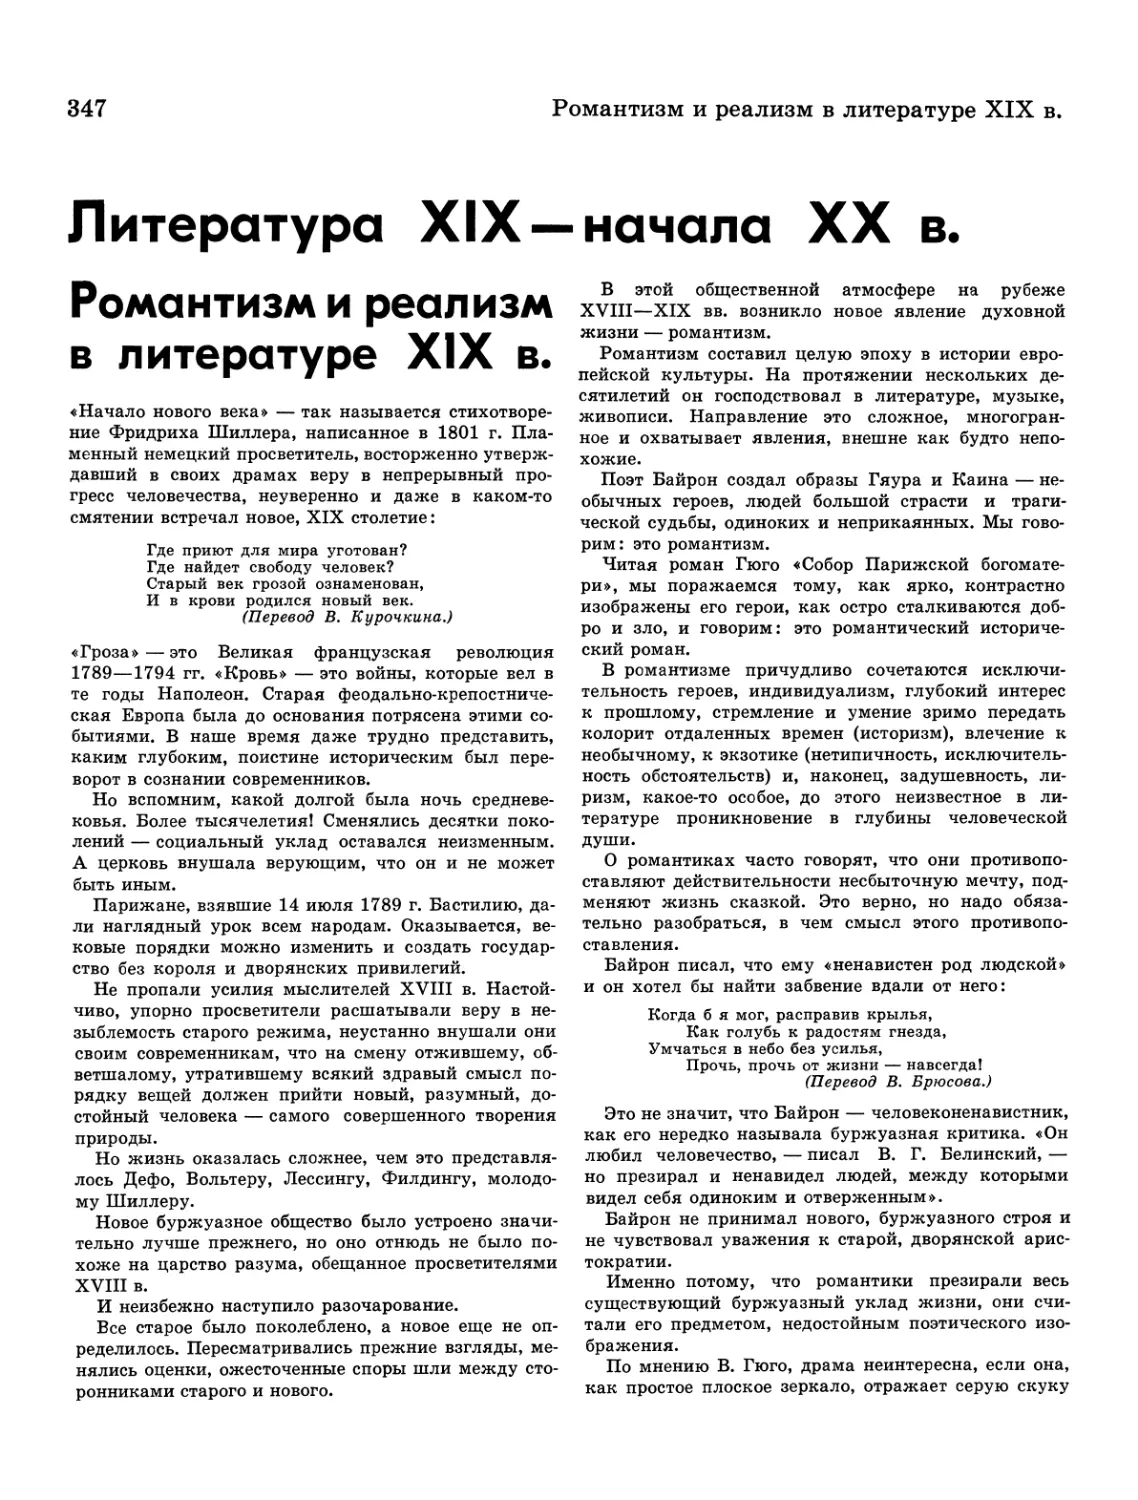 Литература XIX — начала XX в.